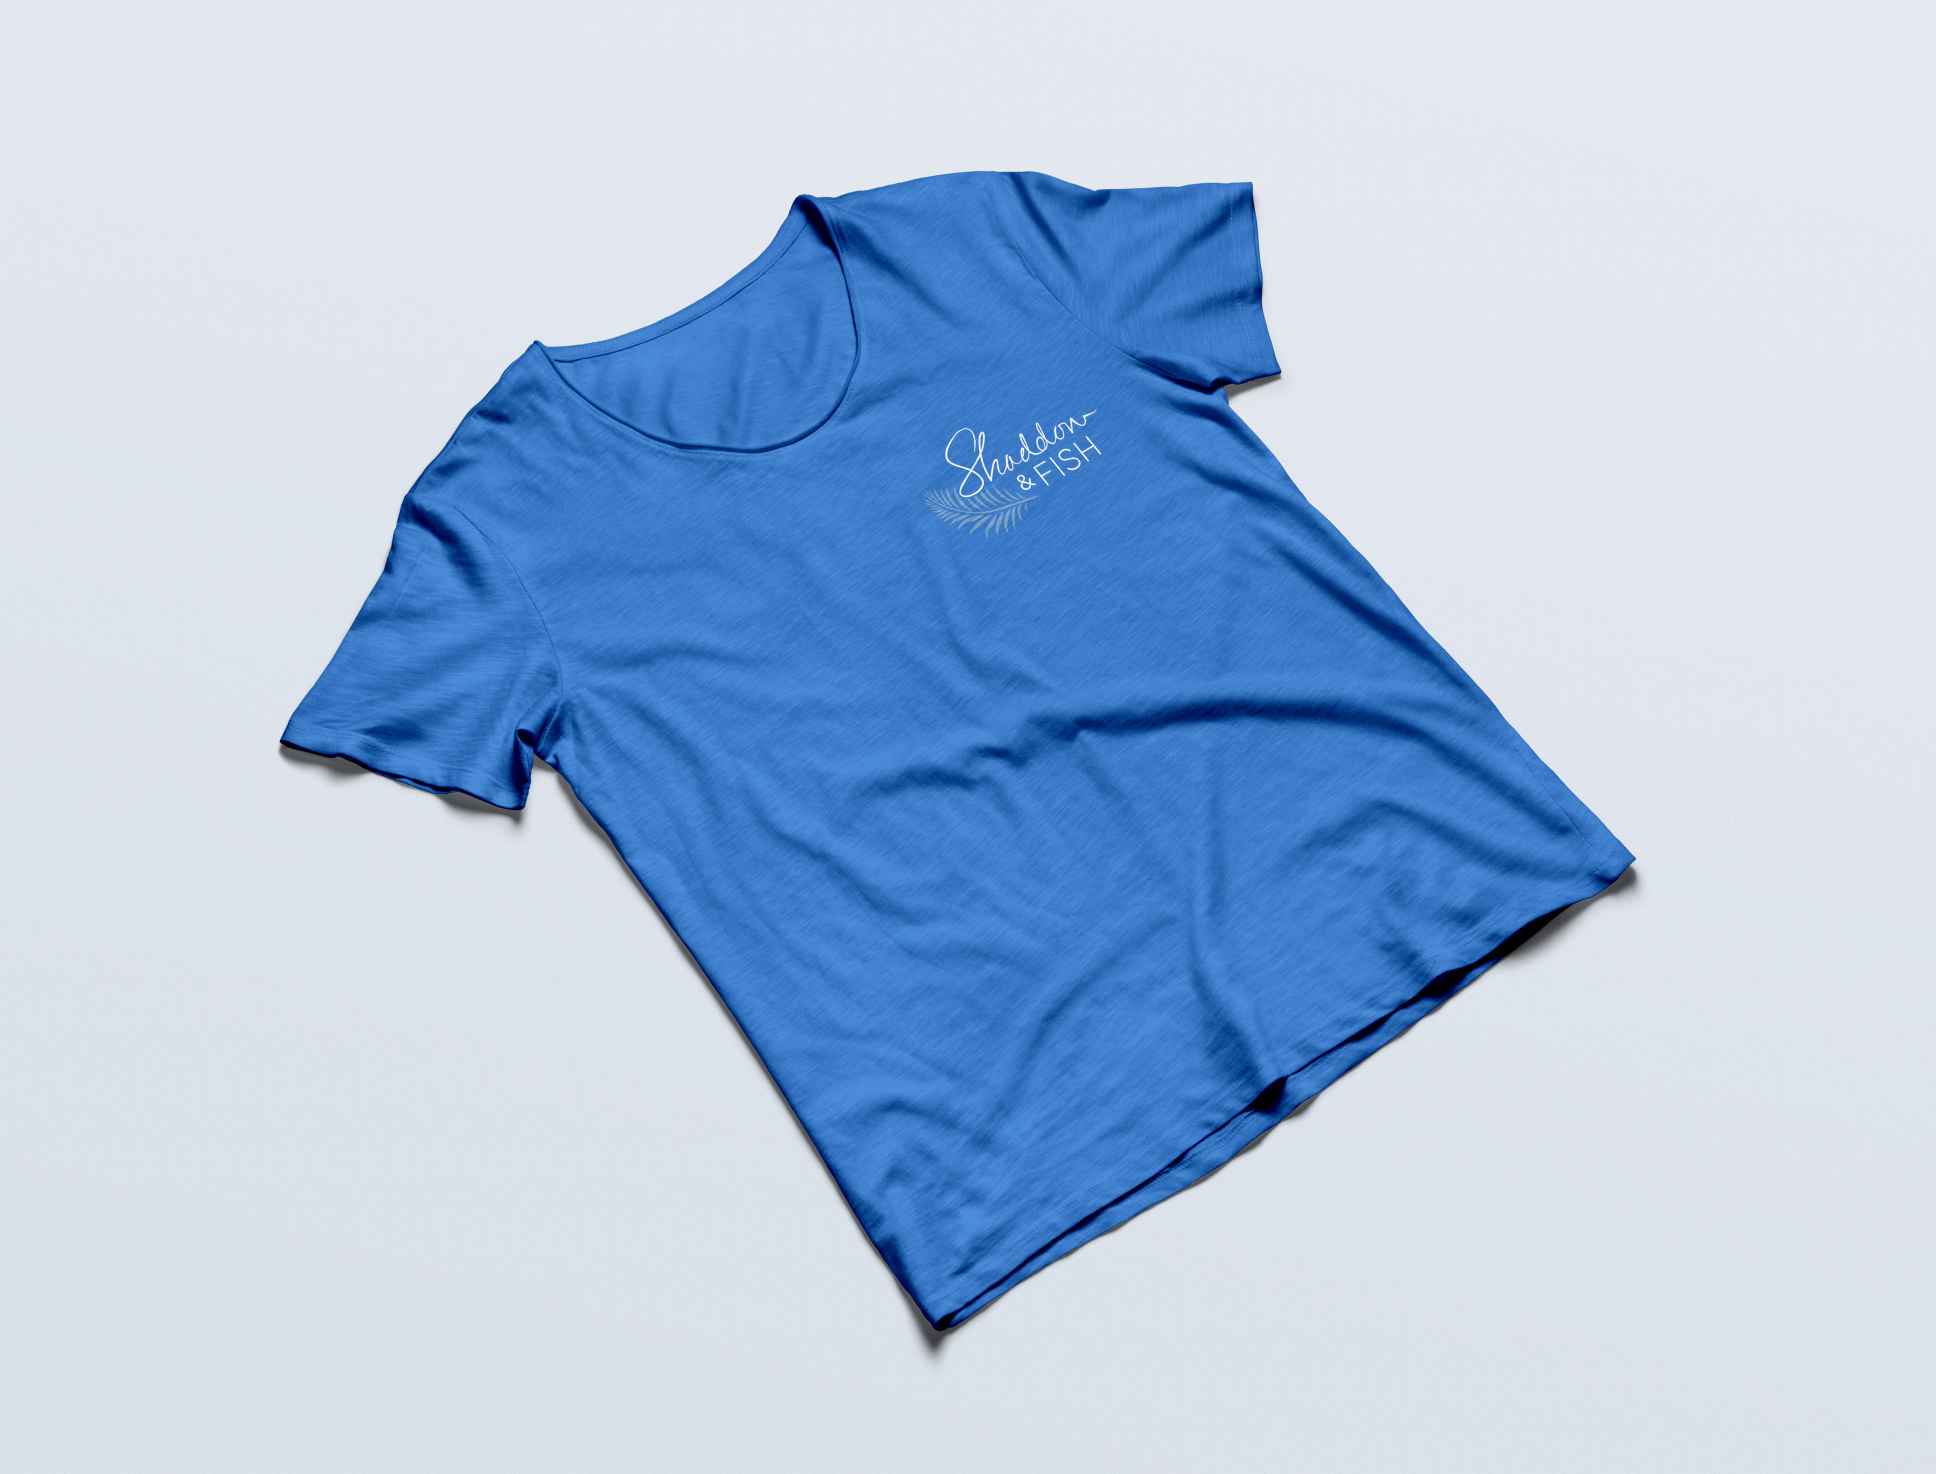 Logo Design Light blue Shaddon & Fish t shirt on display